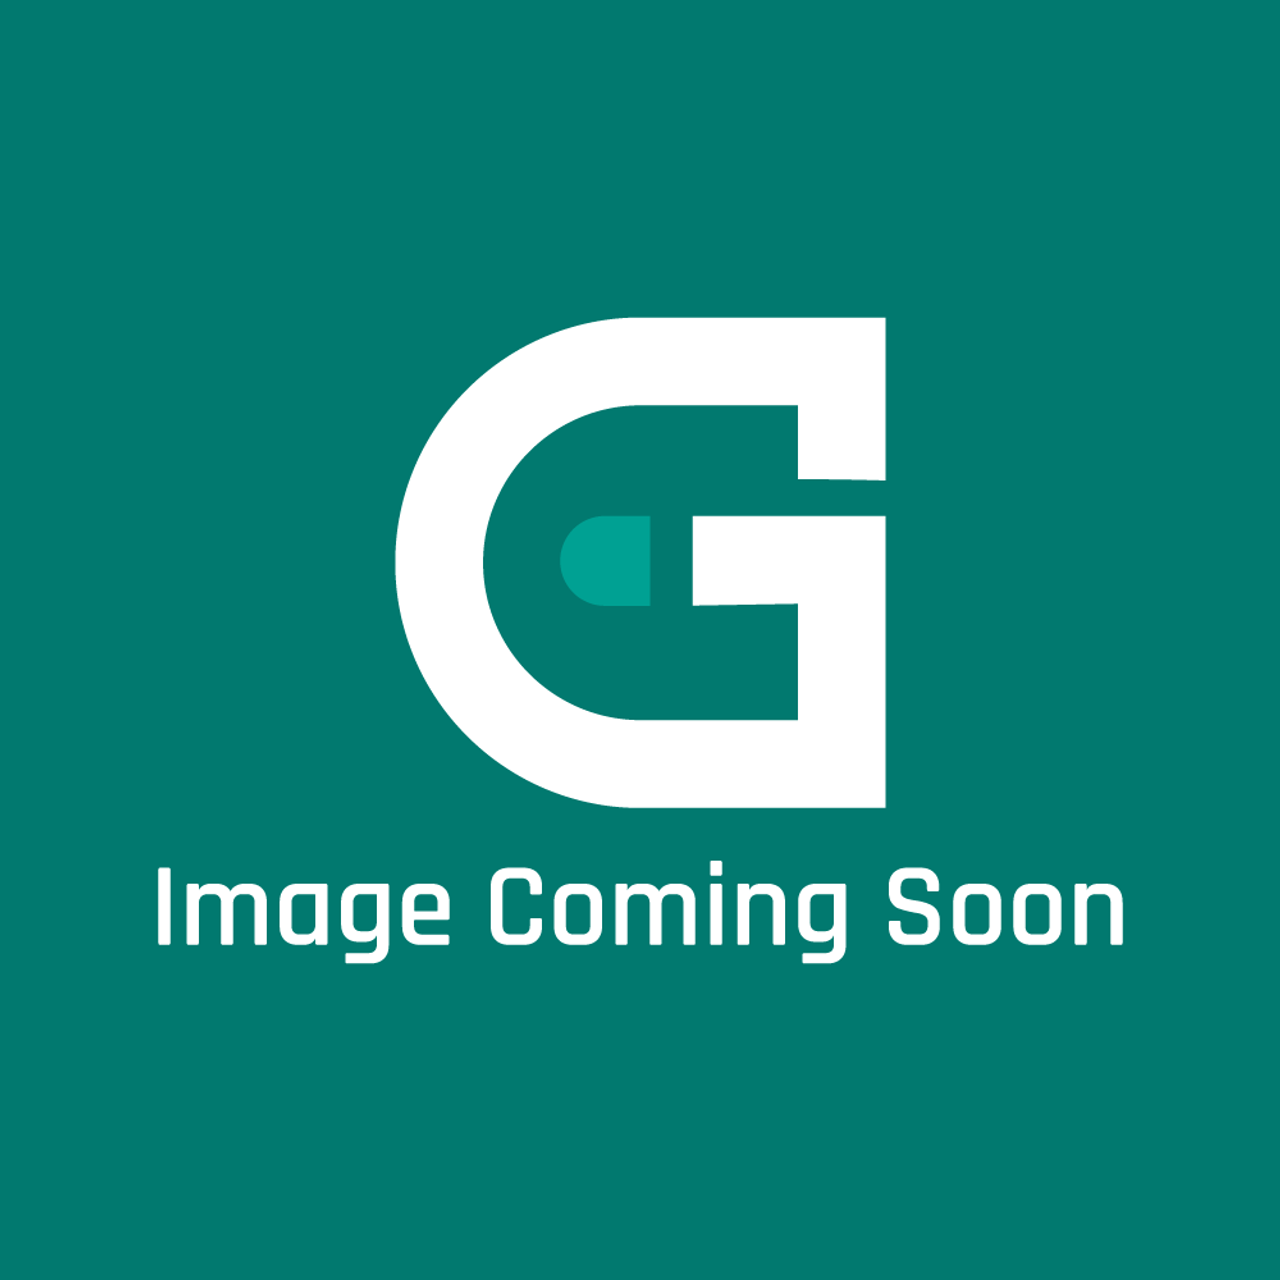 Garland 4602227 - Cfa V2.6.3 Software Plus Menu - Image Coming Soon!